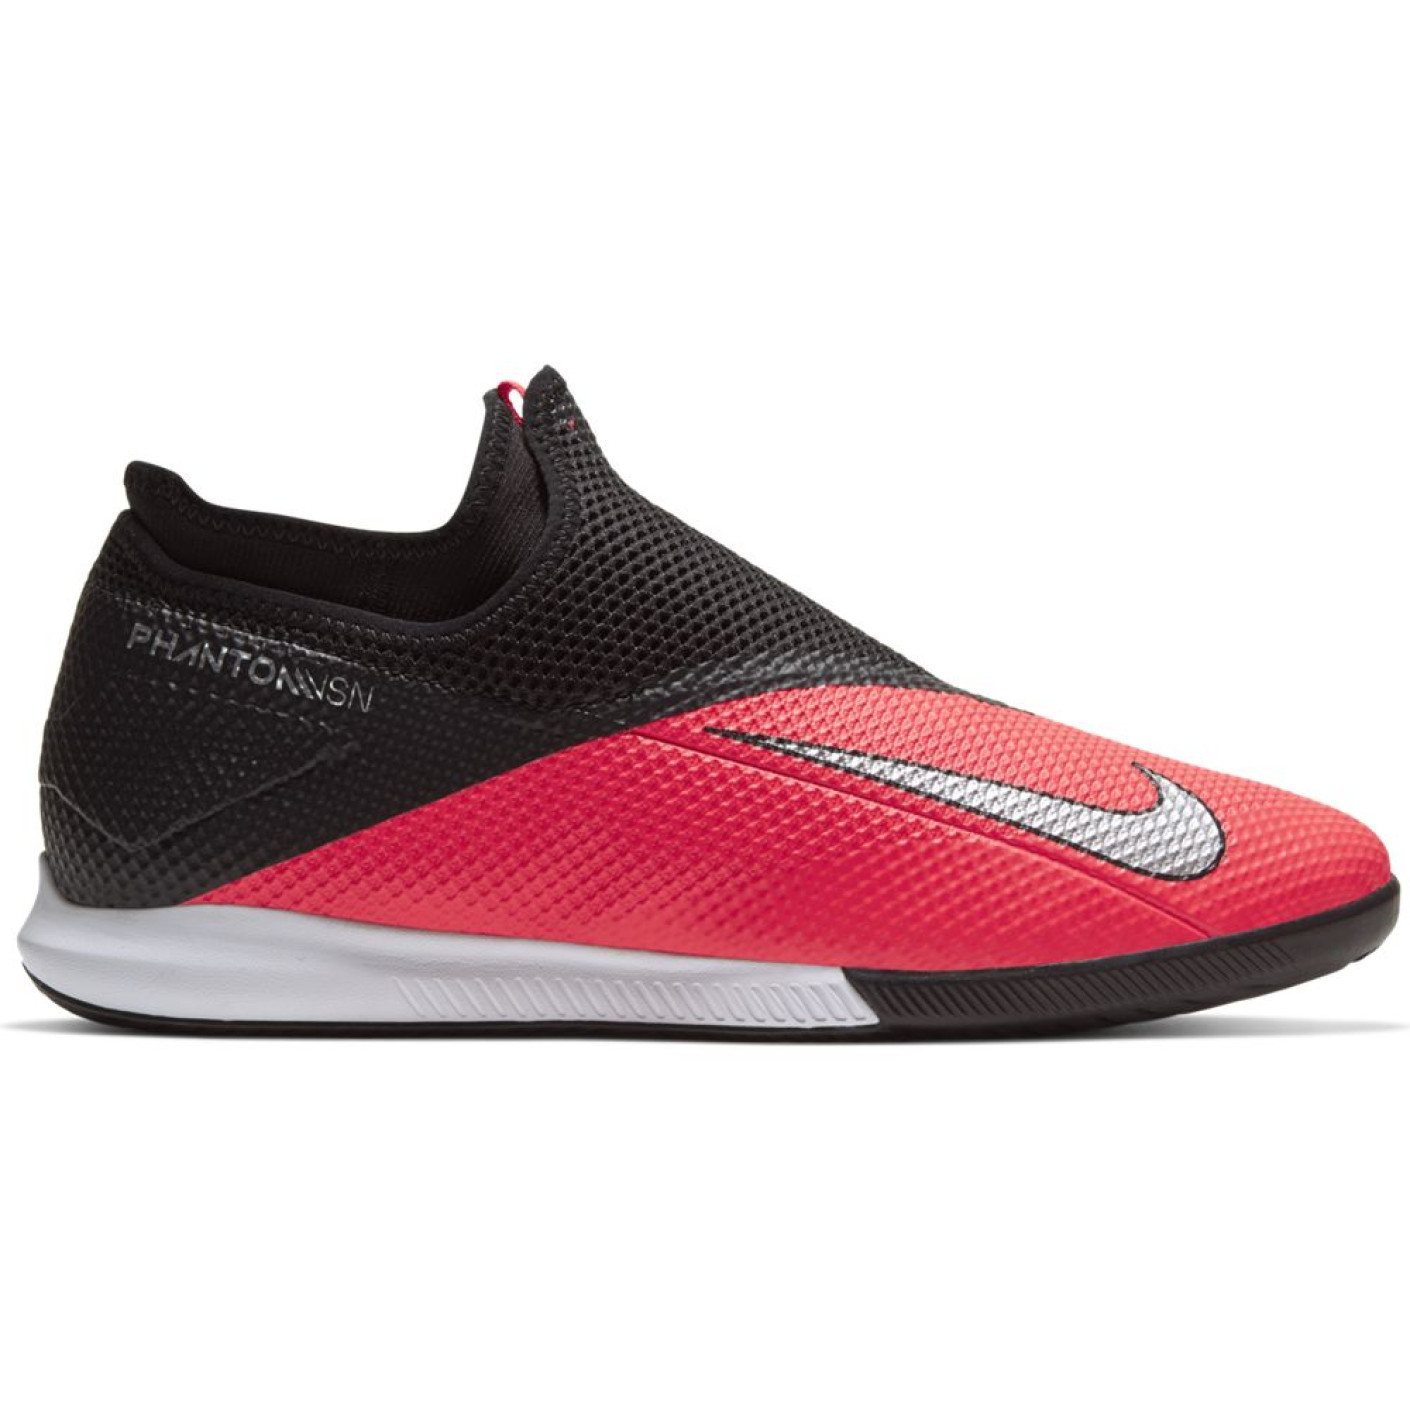 Nike Phantom Vision 2 Academy DF Zaalvoetbalschoenen (IC) Roze Zwart